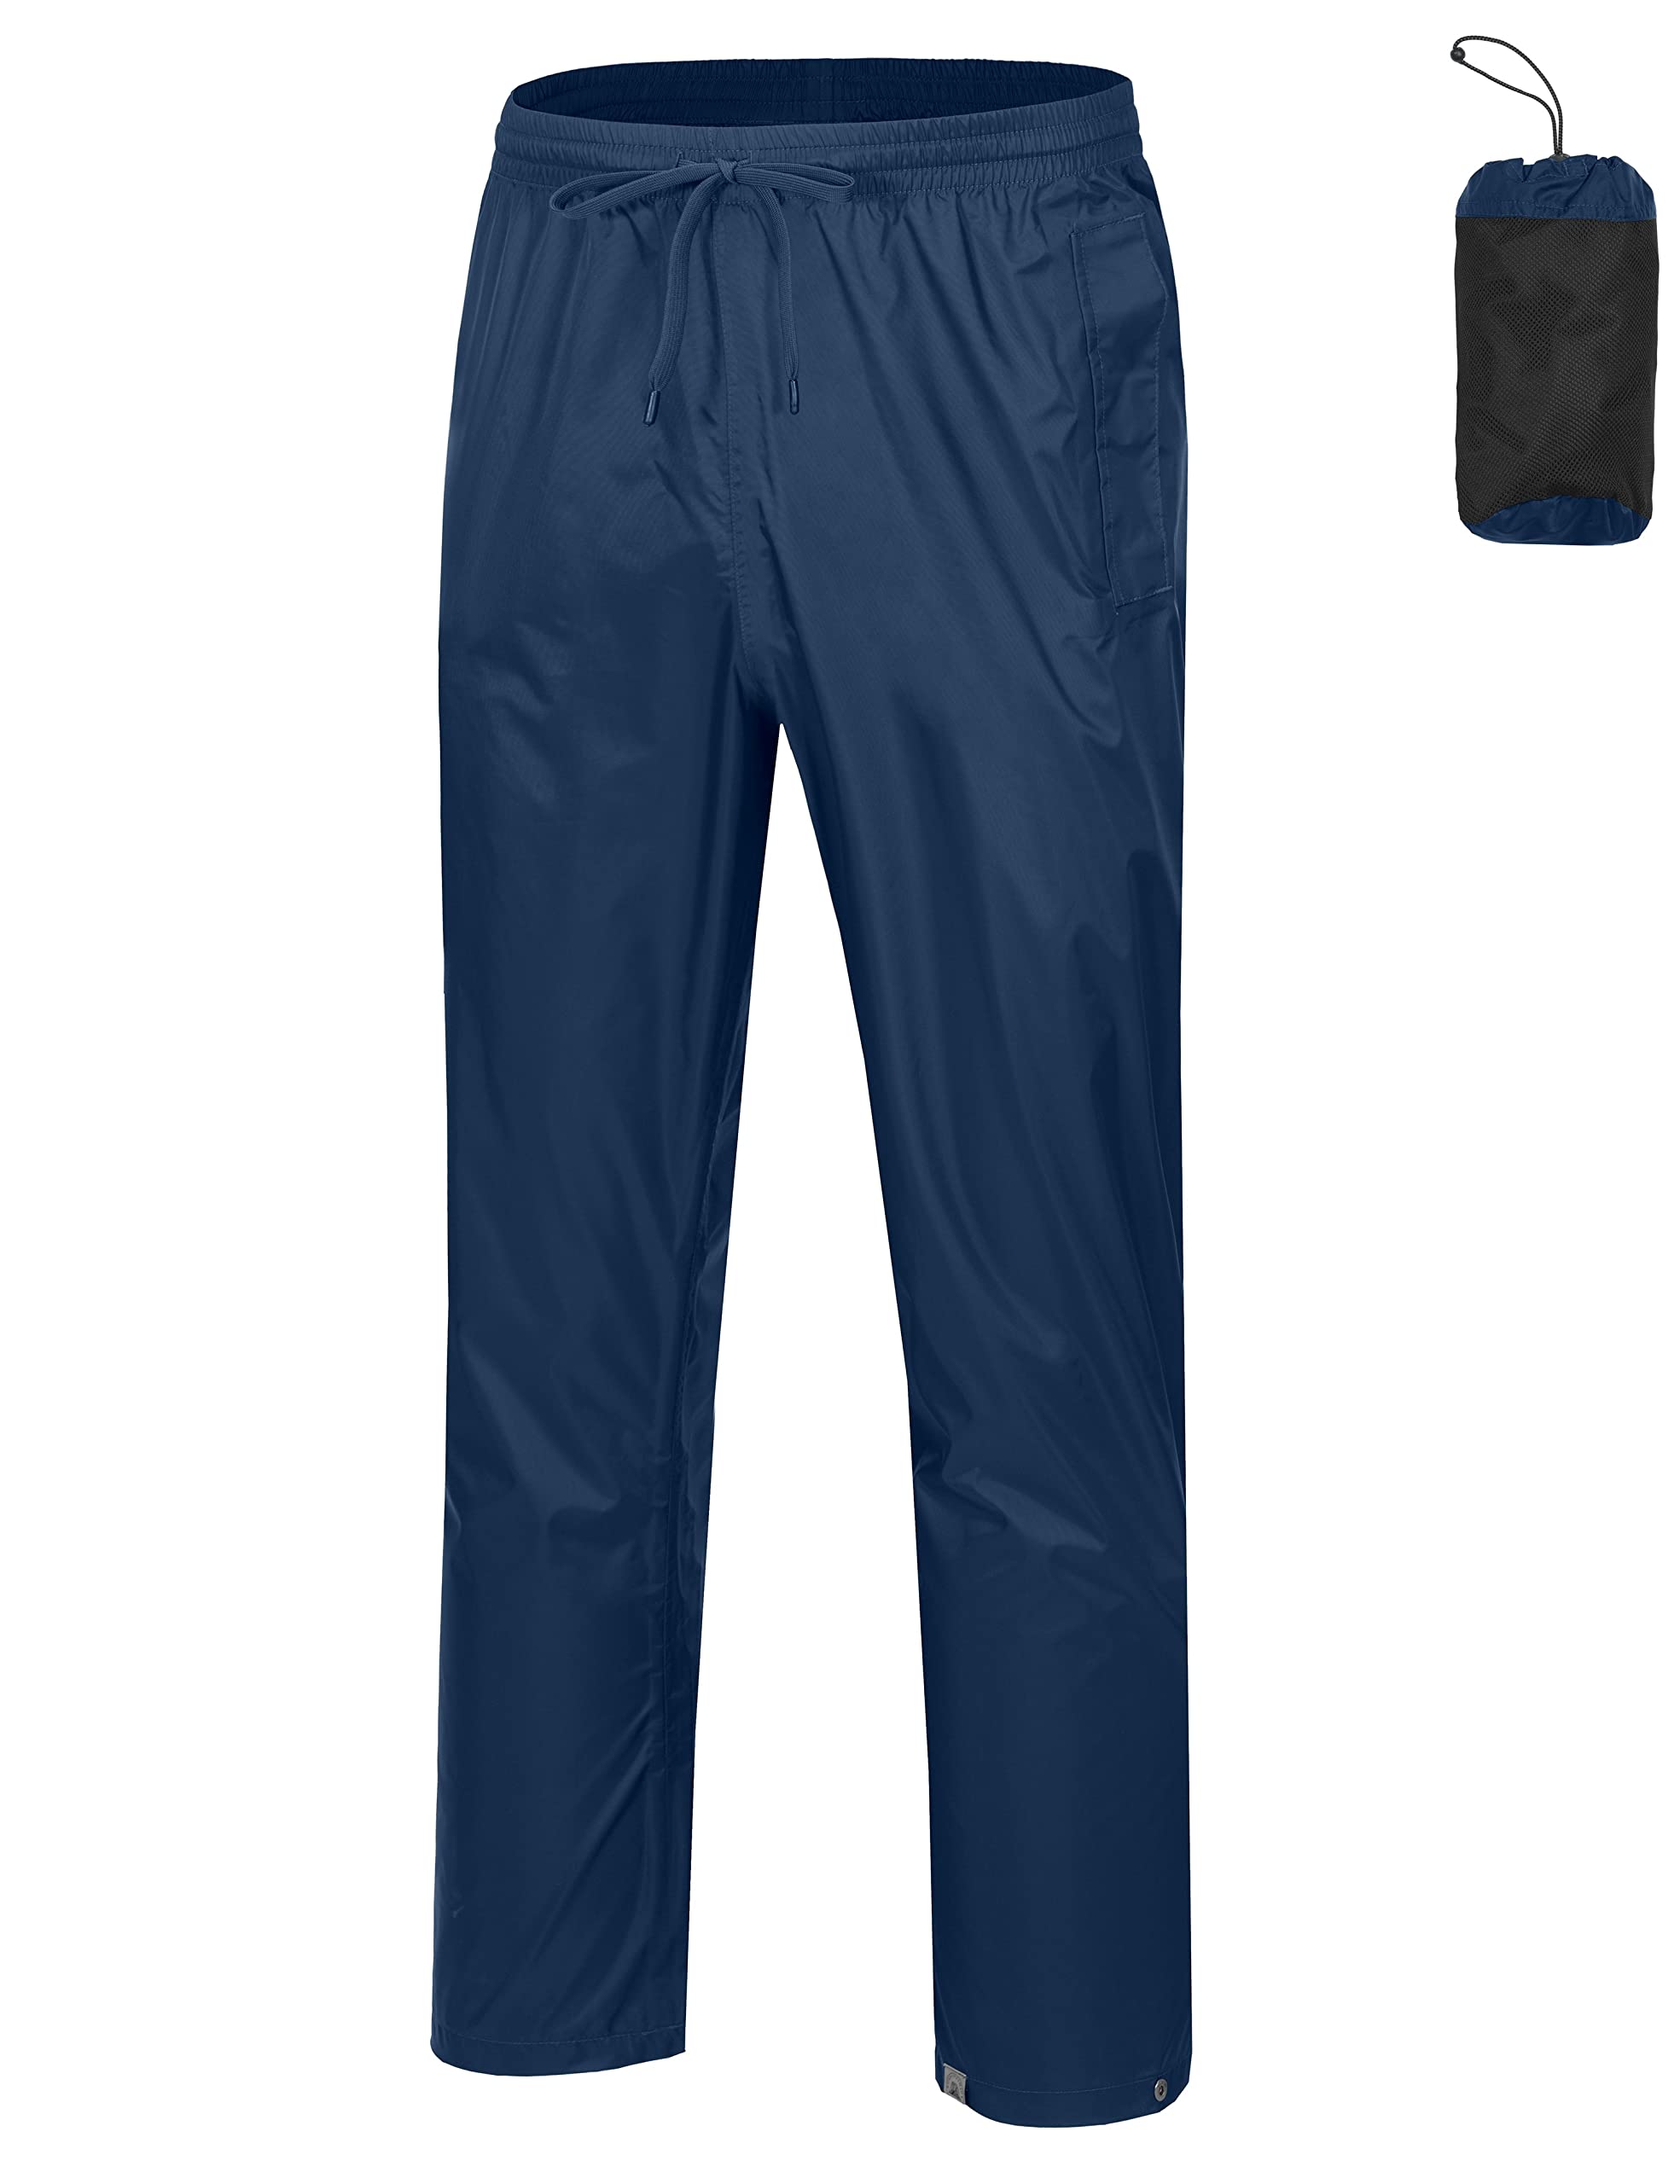  Mens Rain Pants Lightweight Waterproof Pants Windproof  Outdoor Pants For Work Golf Hiking Fishing